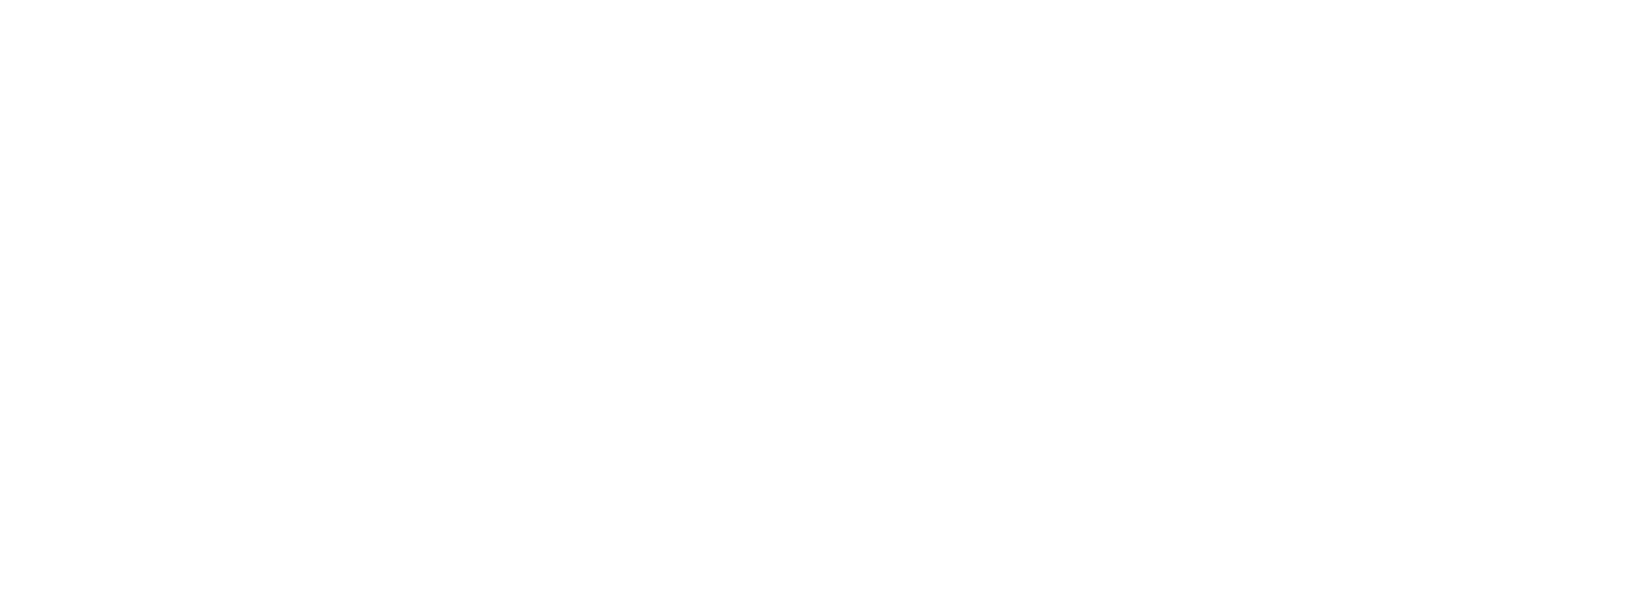 Pernod Ricard logo grand pour les fonds sombres (PNG transparent)